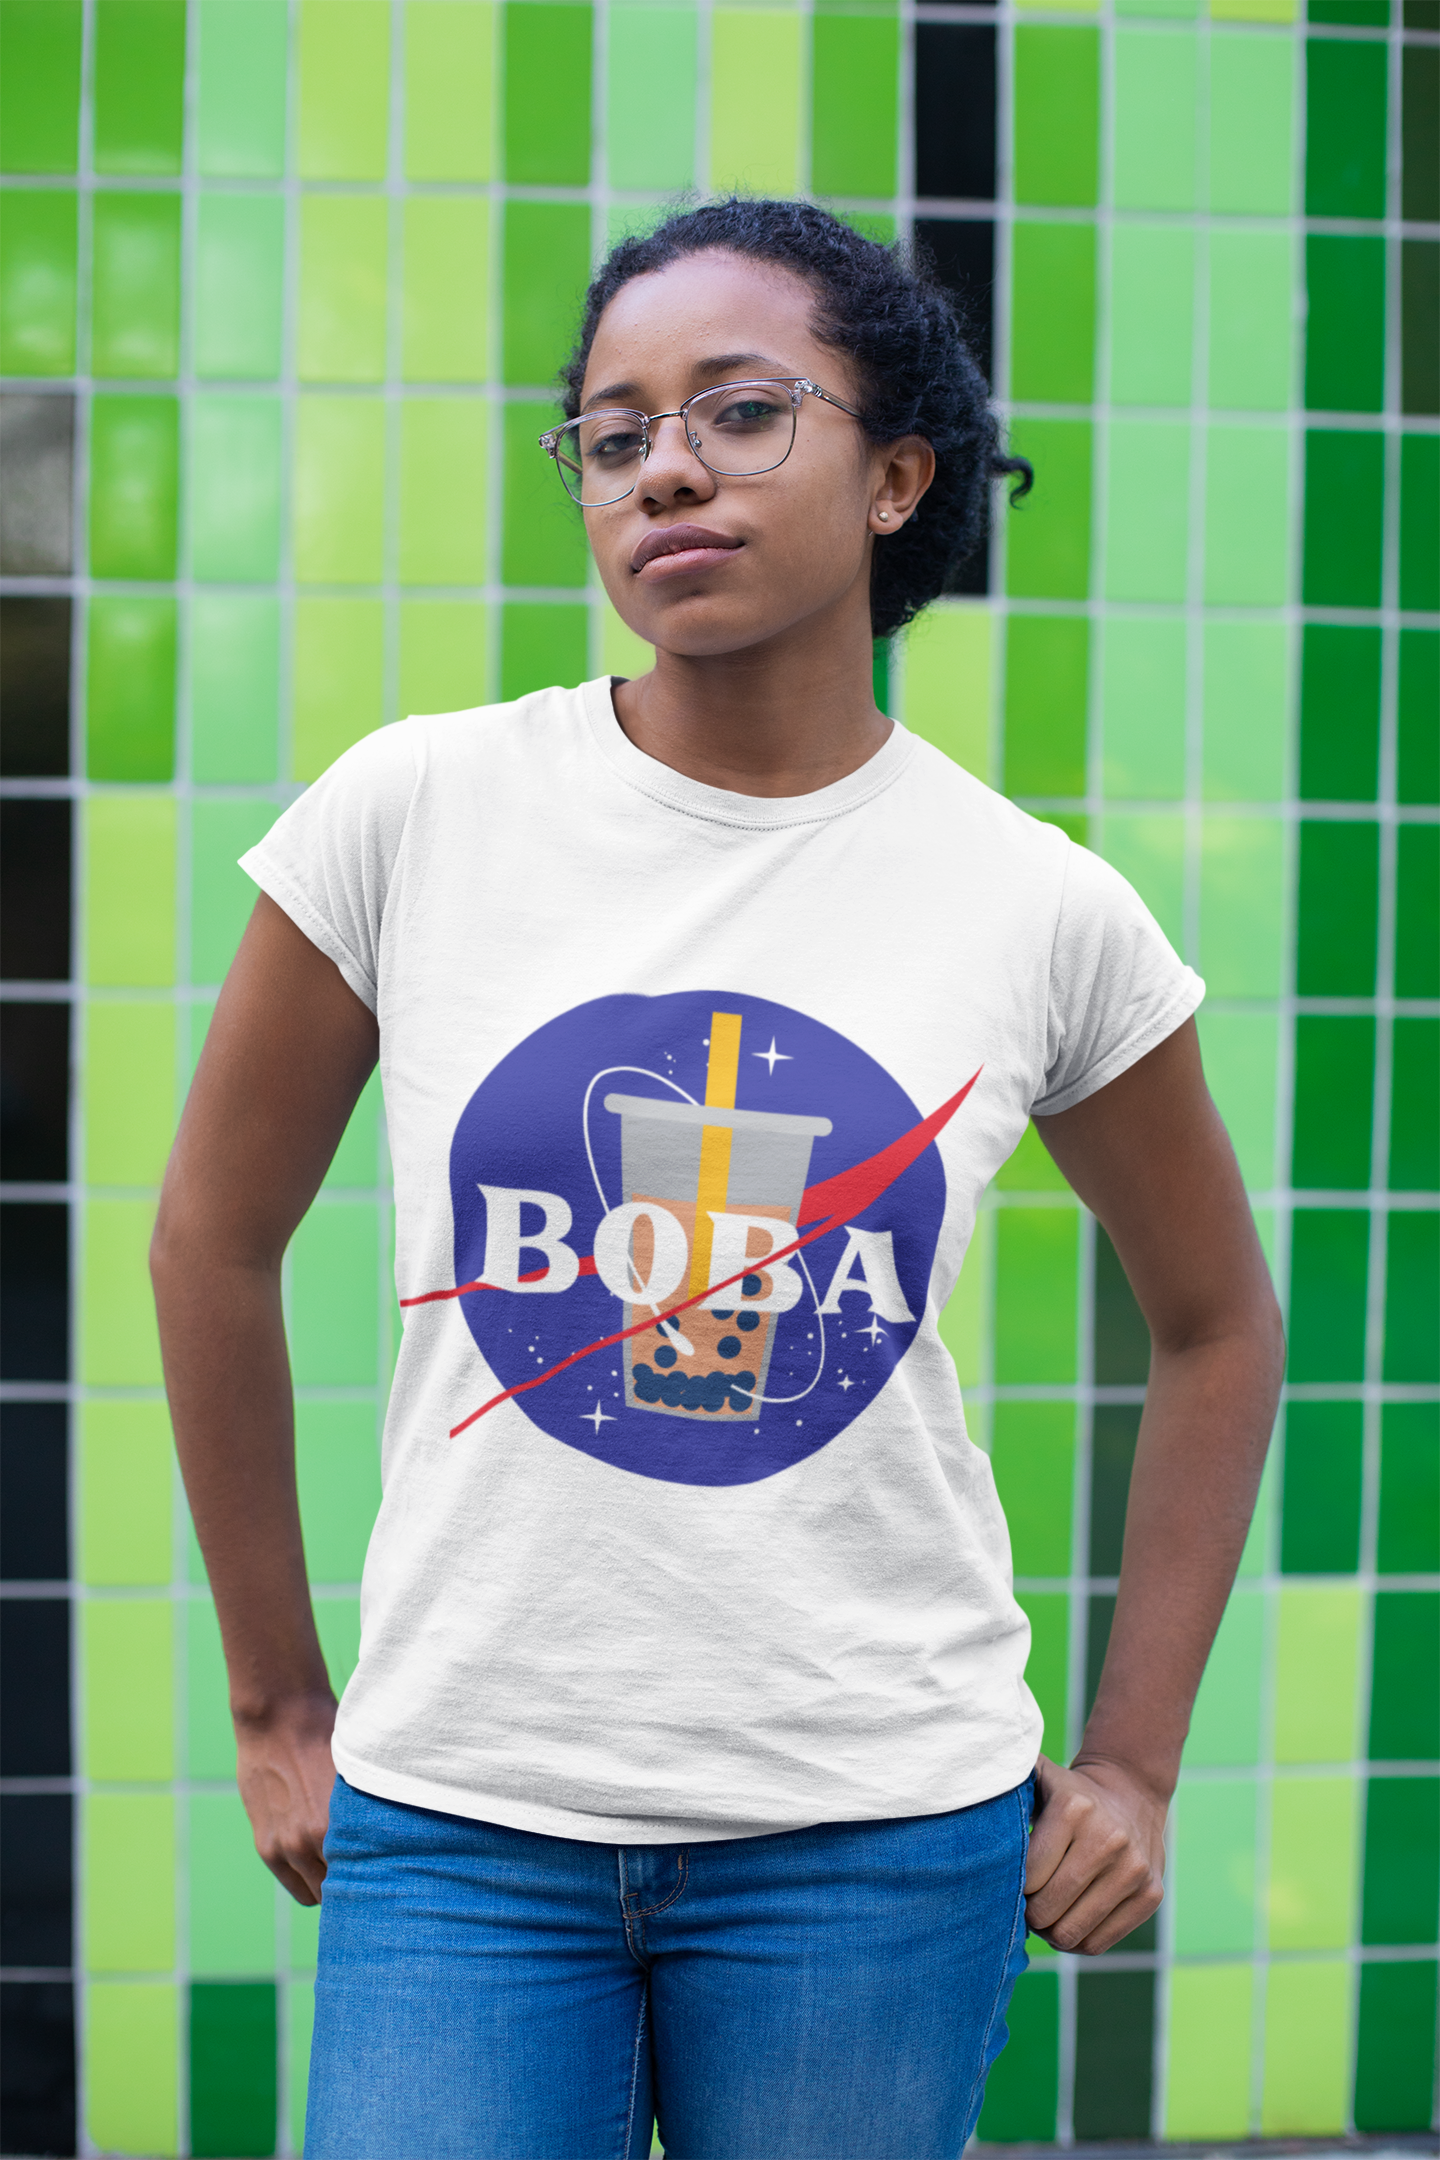 Space Boba Shirt Mockup worn by a woman - NASA parody